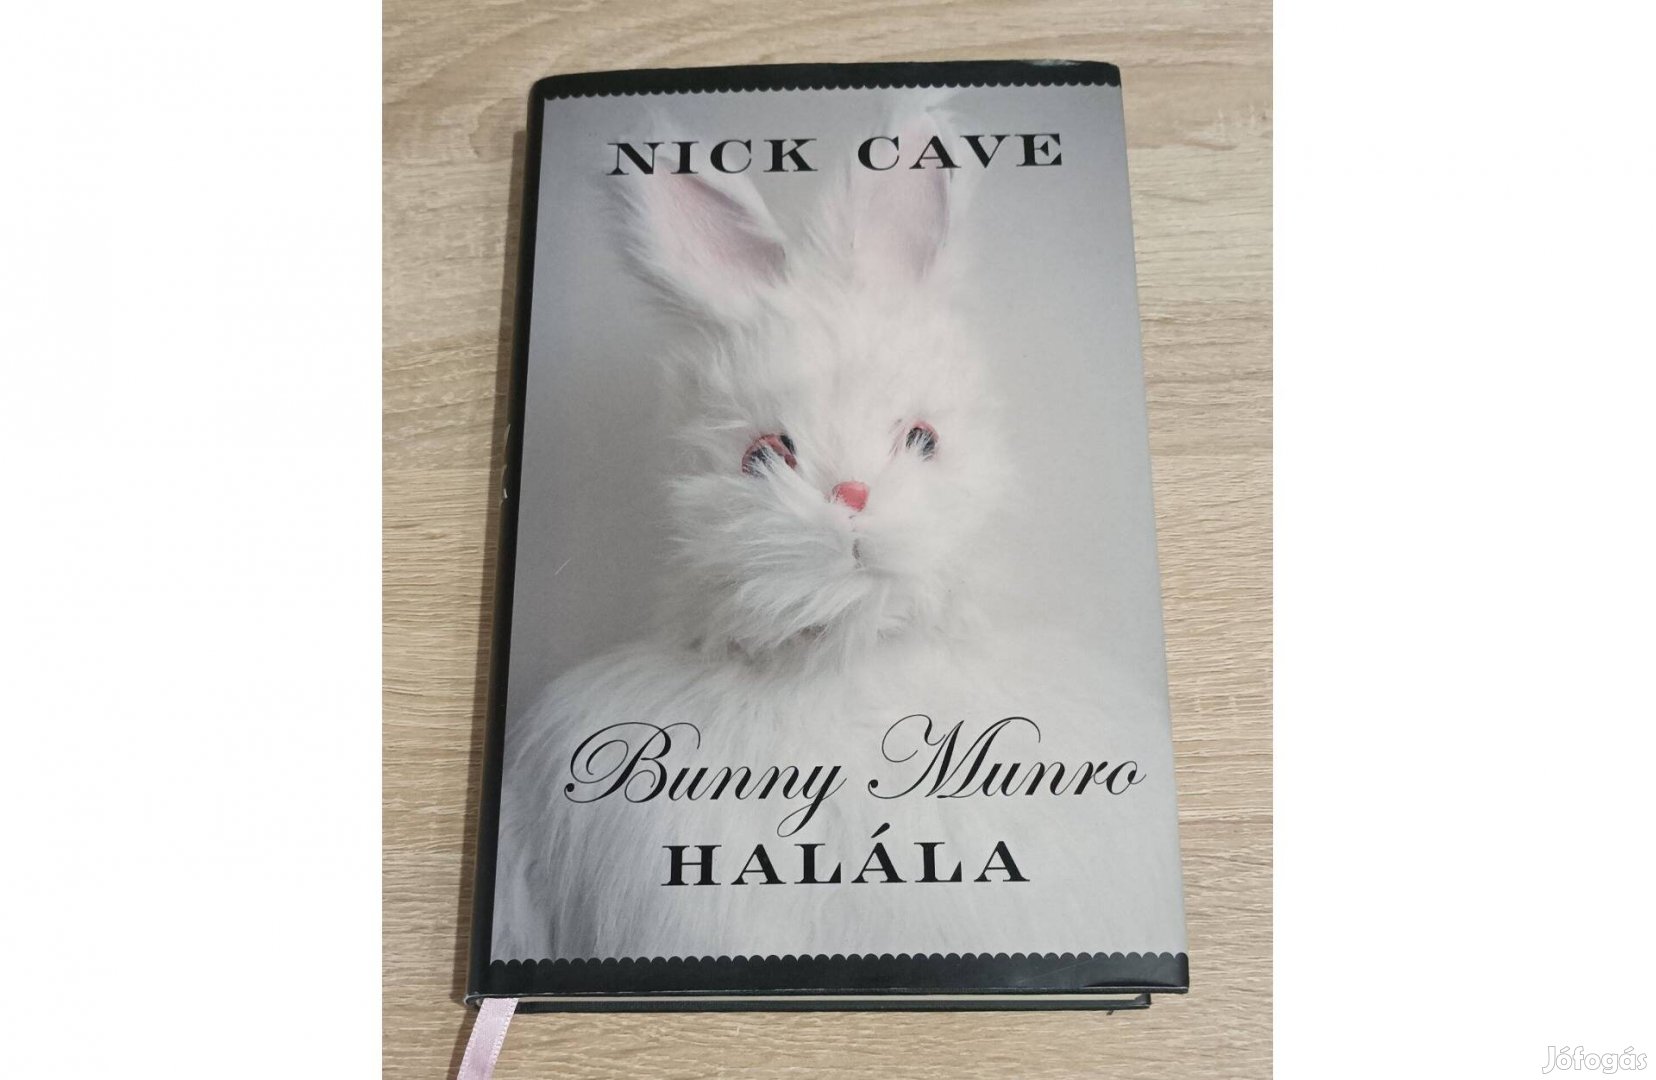 Nick Cave - Bunny Munro halála c. könyv eladó